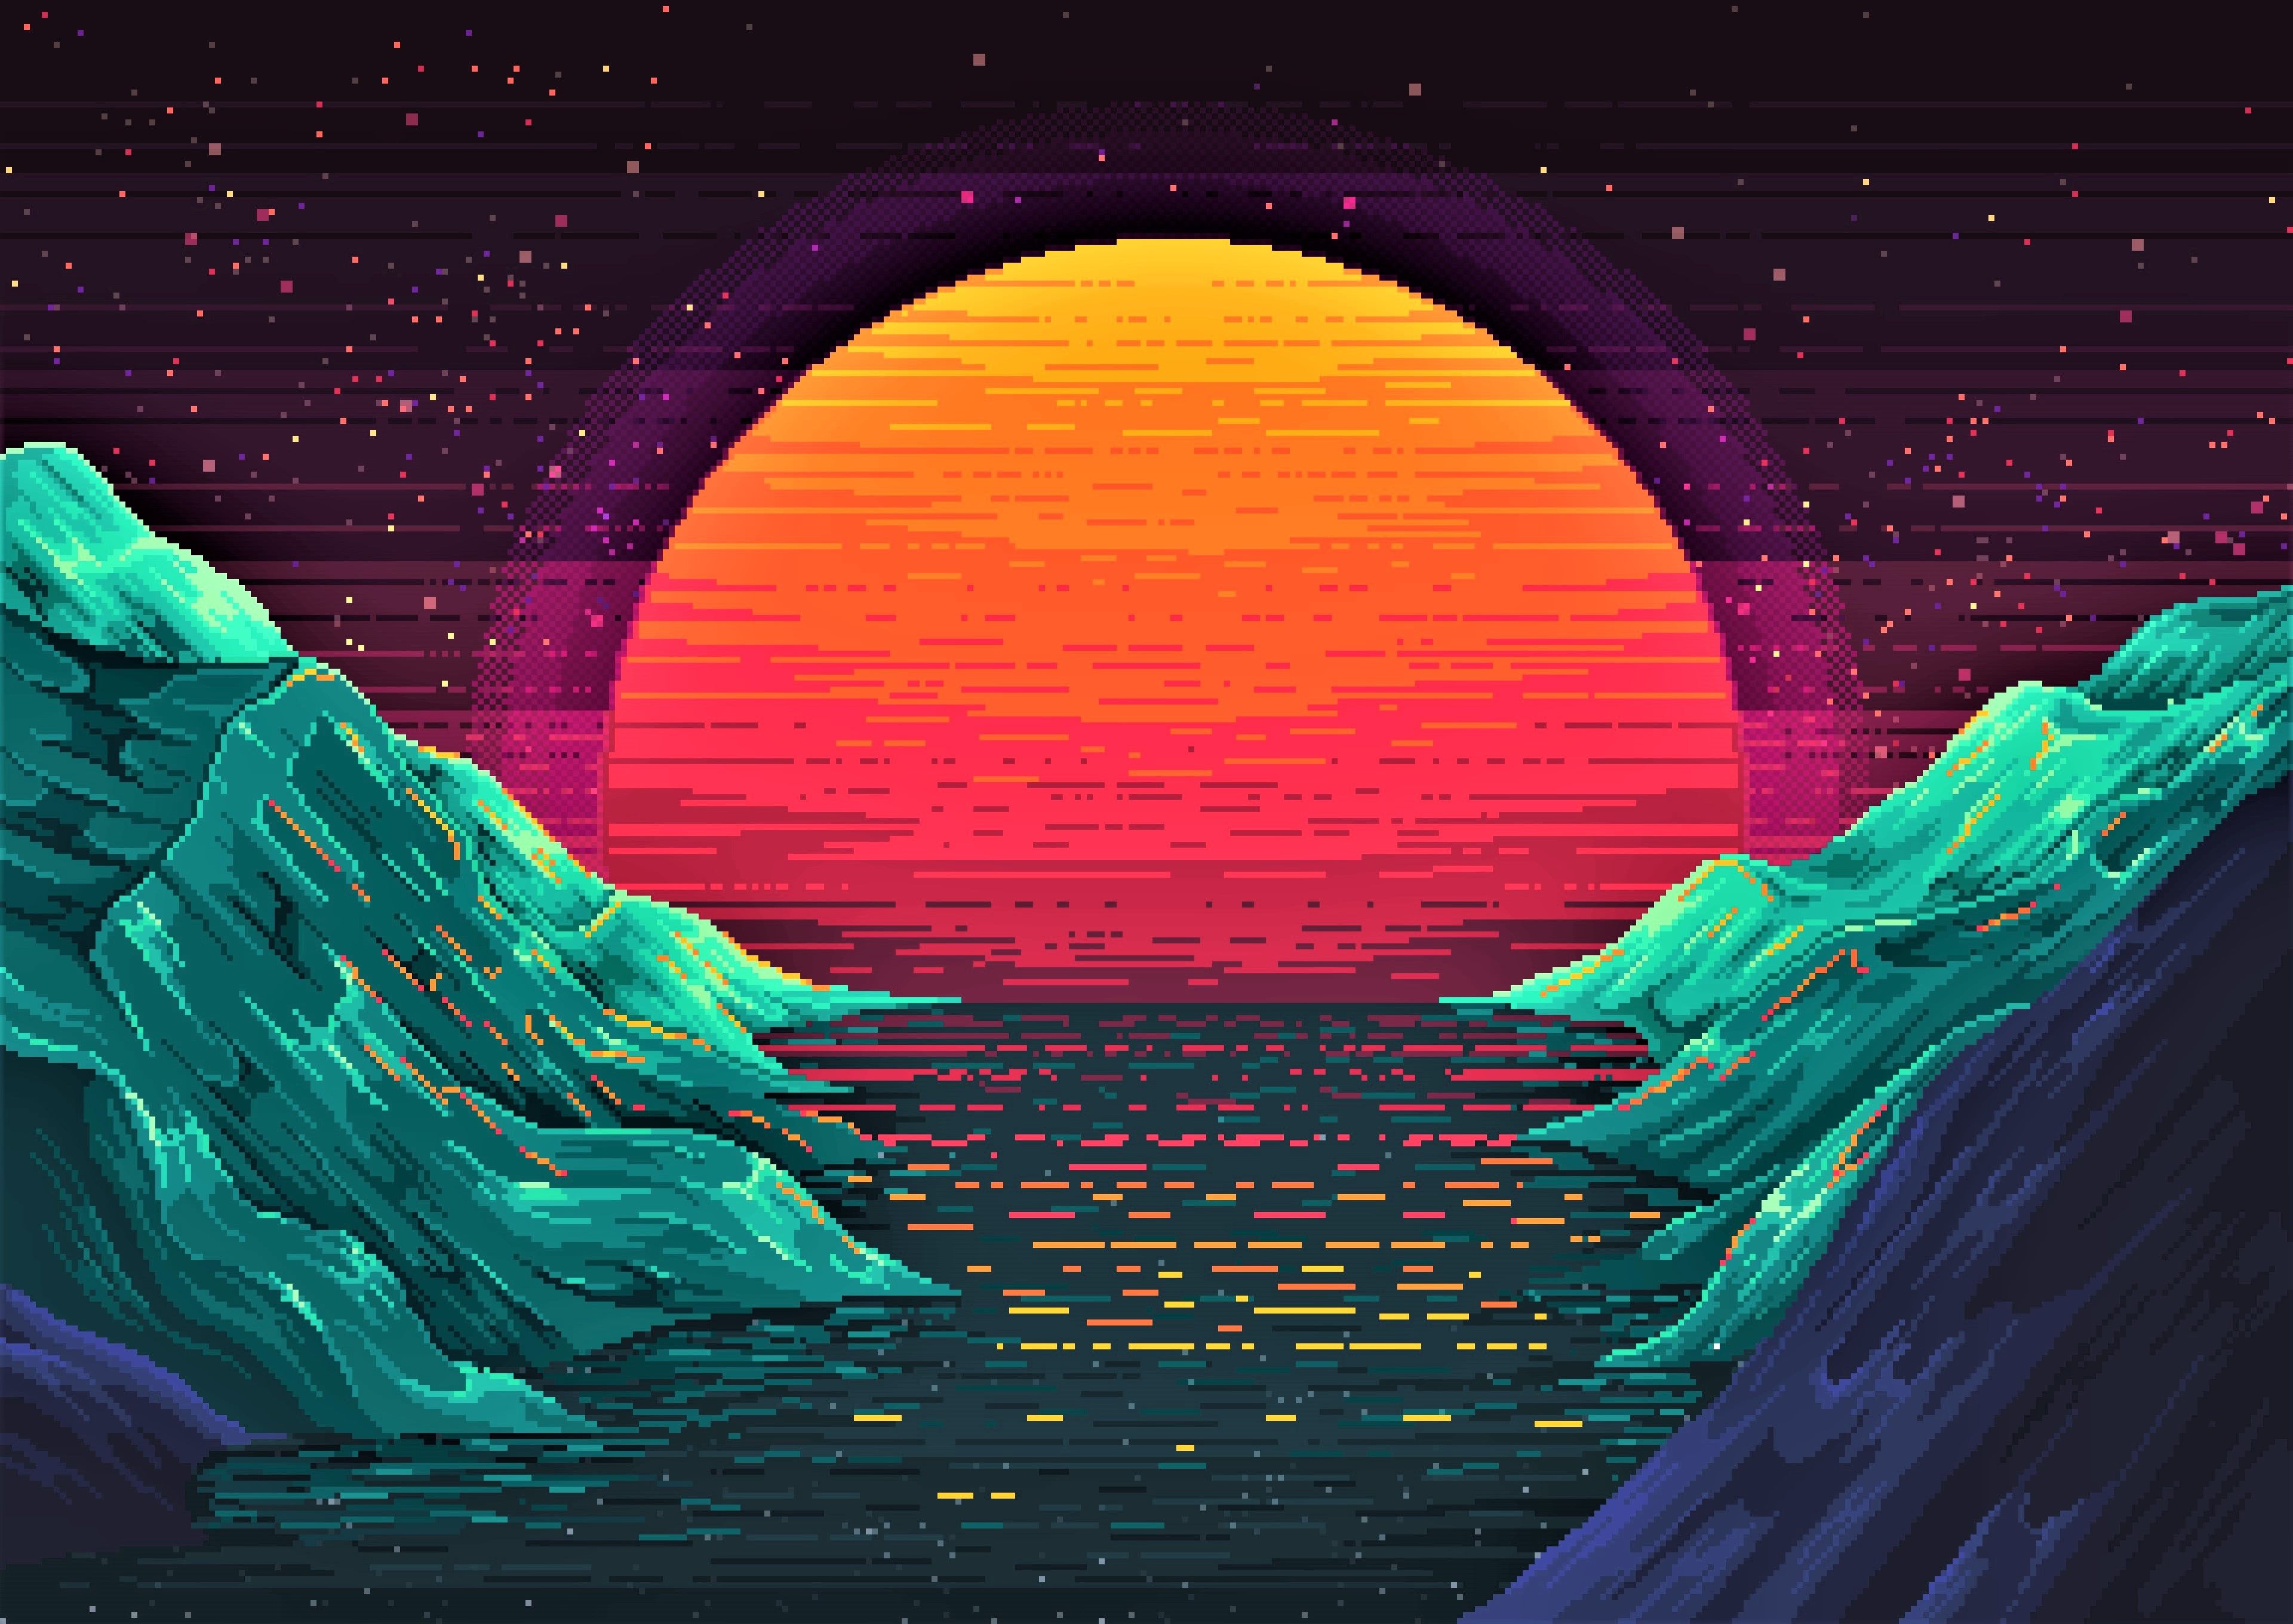 Sun, Artistic, Ocean, Retro Wave, Landscape, Pixel Art, Mountain wallpaper